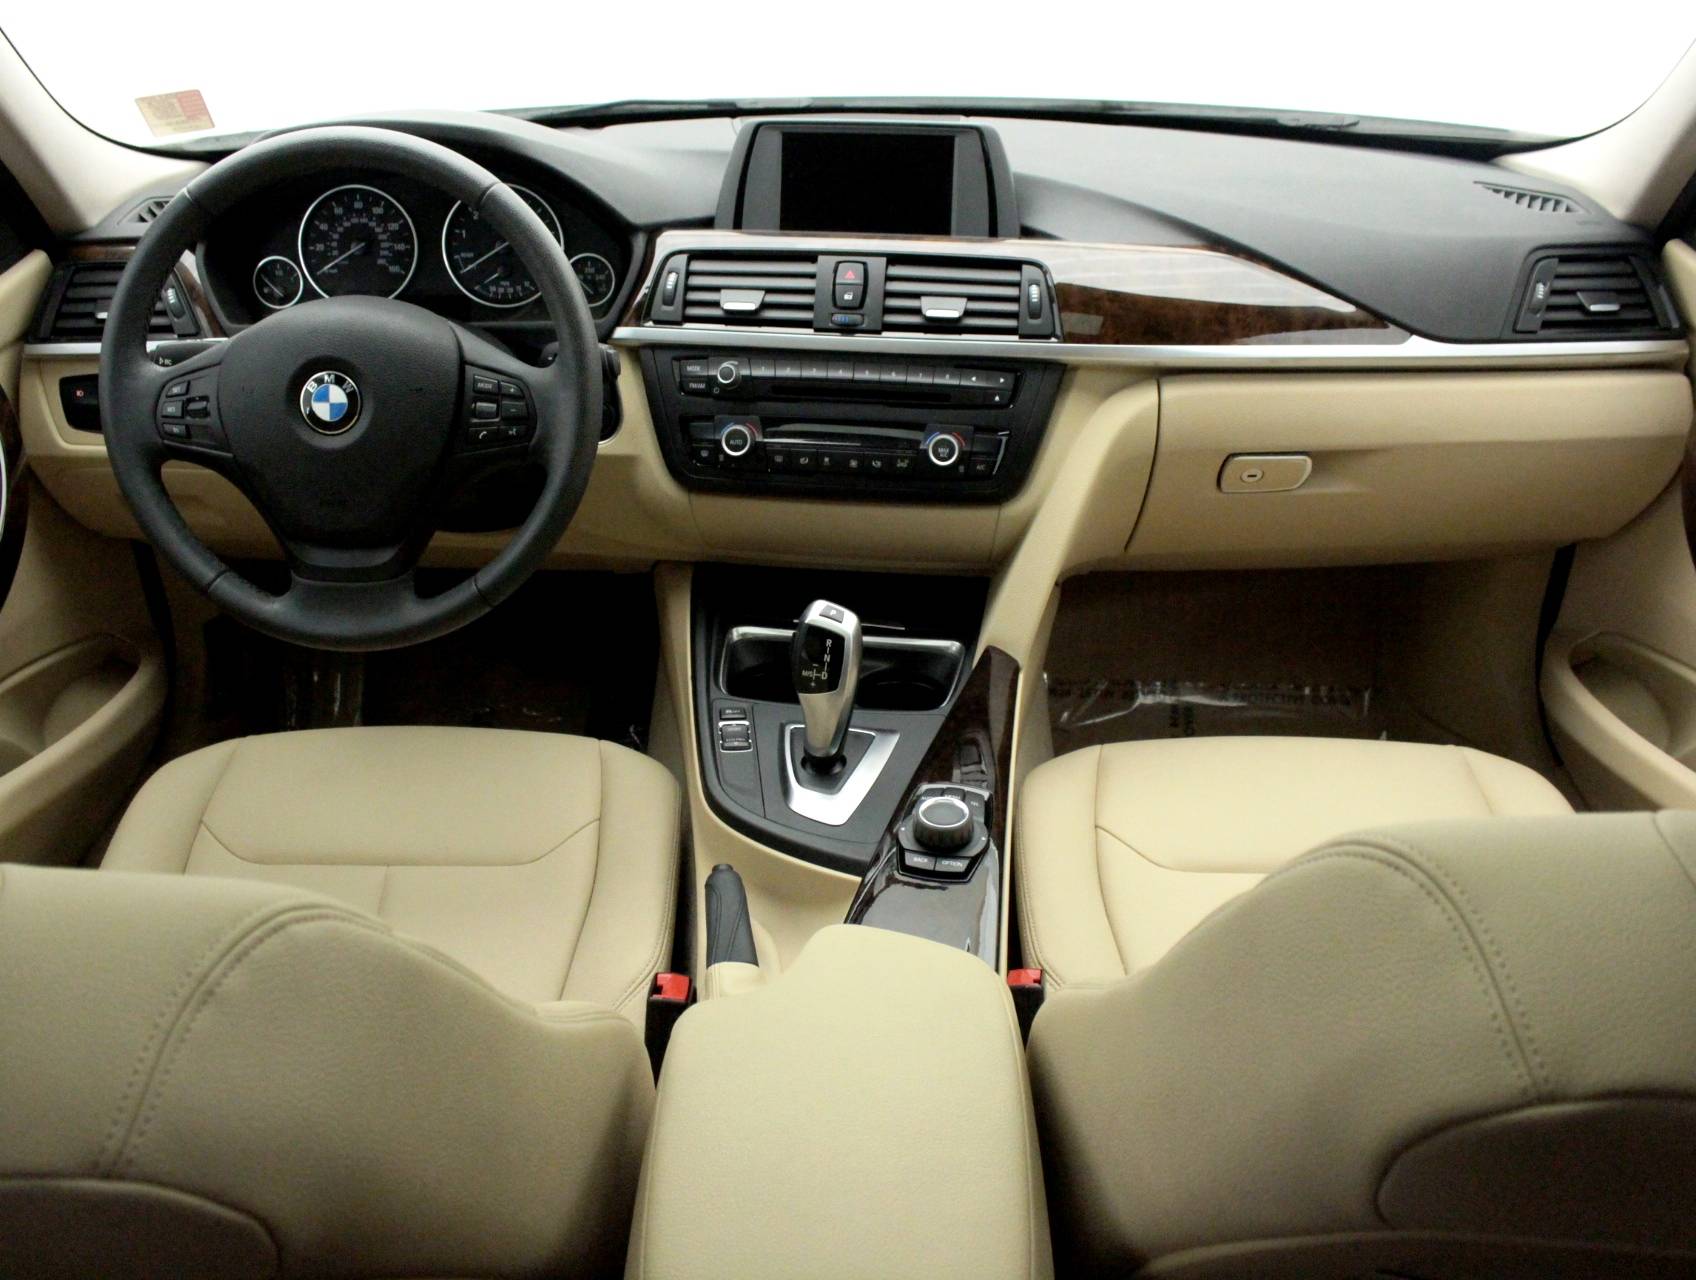 Florida Fine Cars - Used BMW 3 SERIES 2015 MIAMI 320I